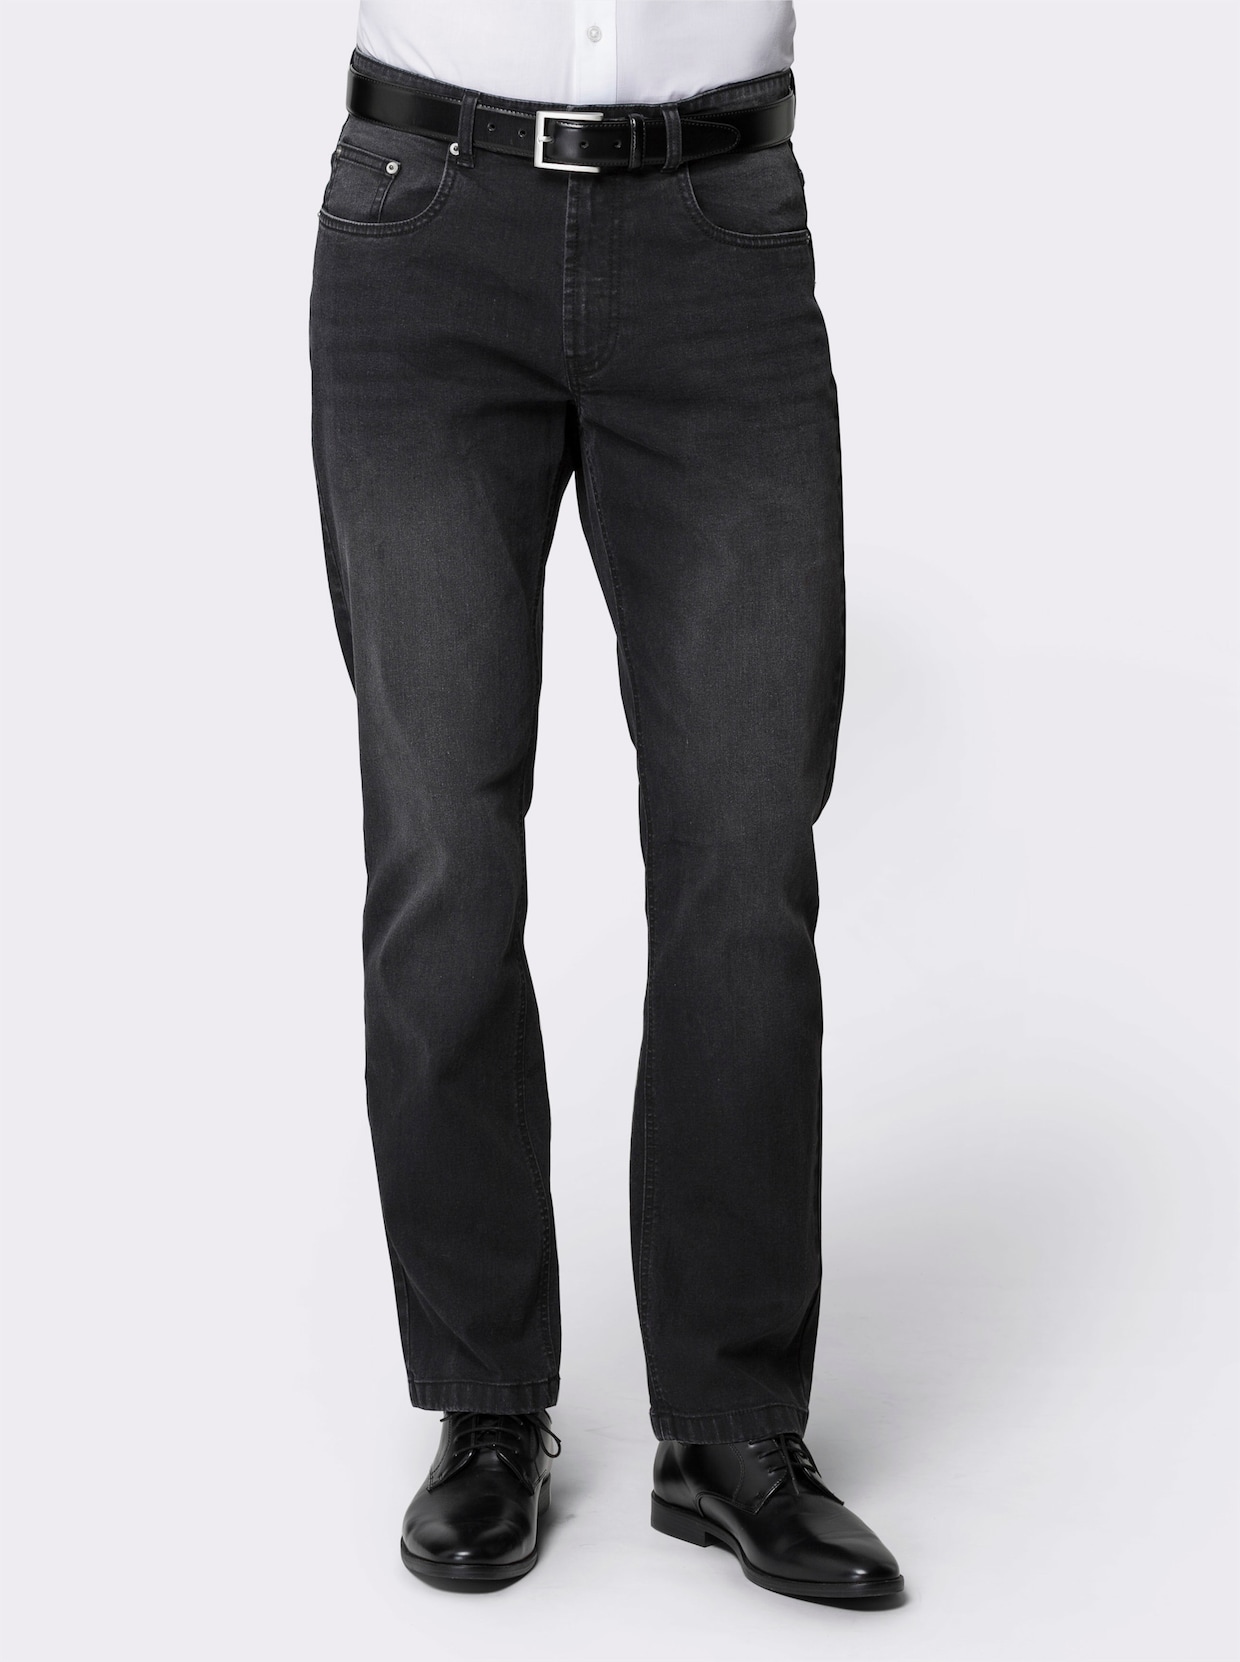 jeans - black denim